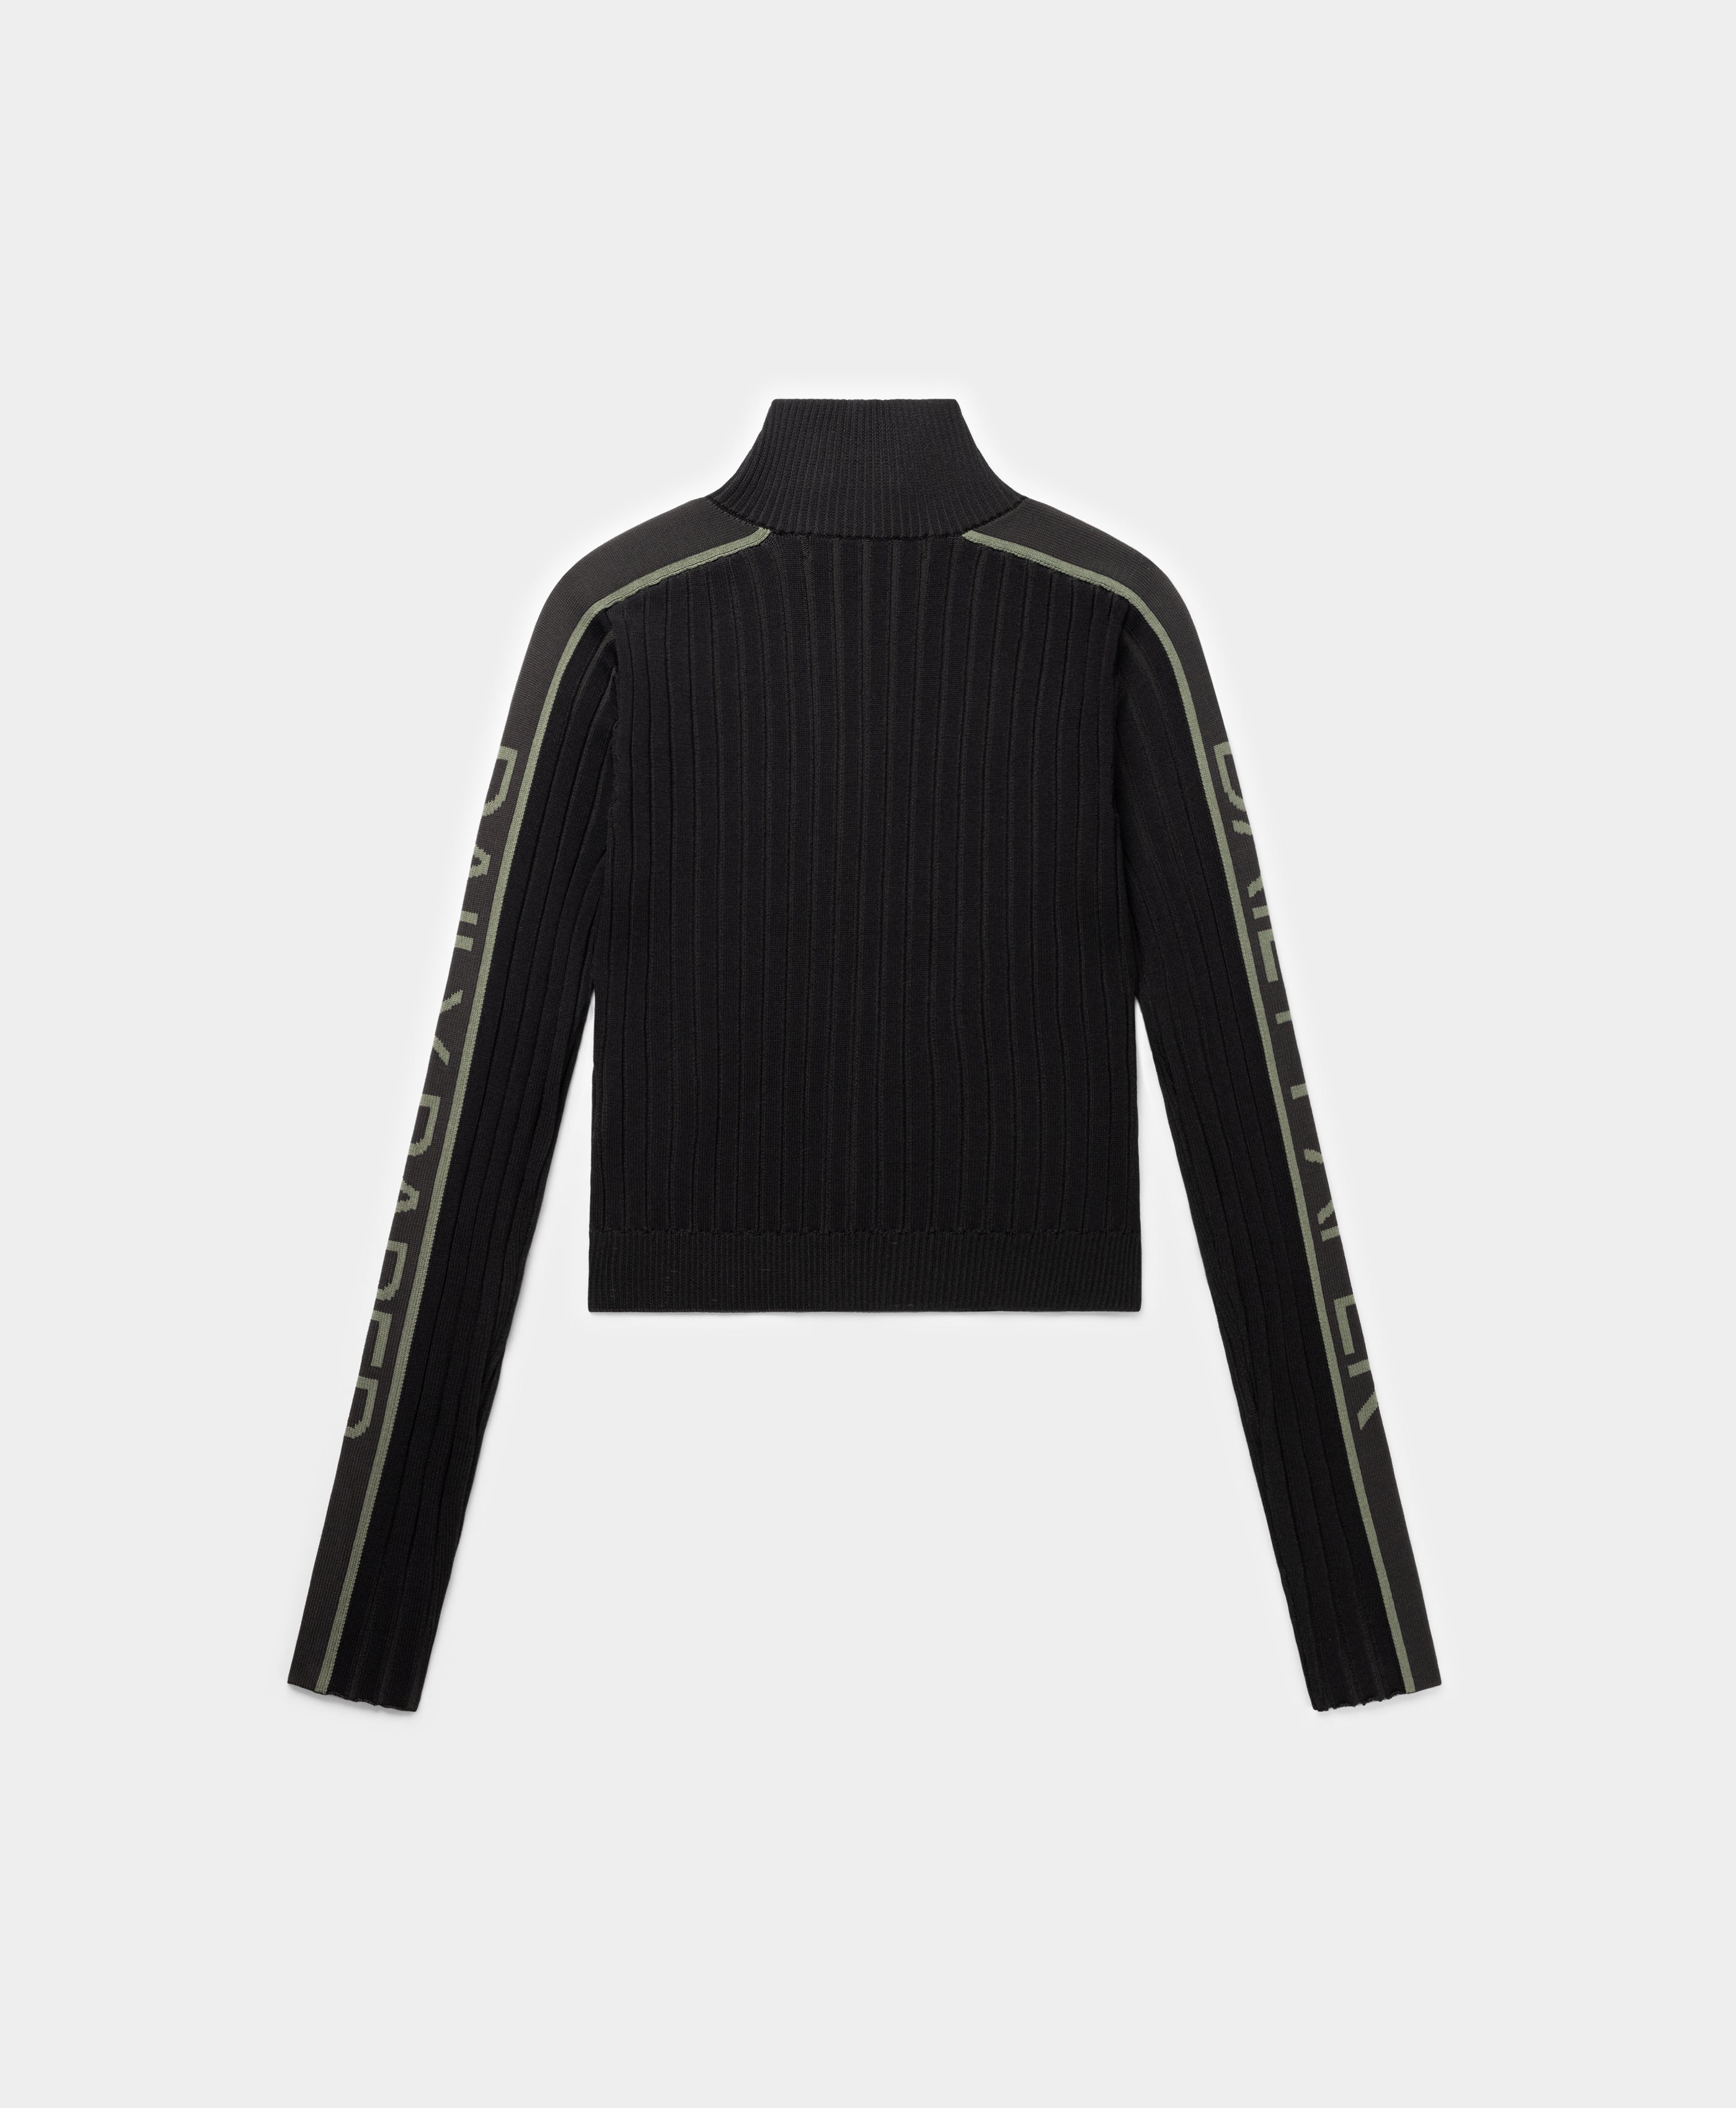 DP - Black Manoa Knit Sweater Cardigan - Packshot - Rear